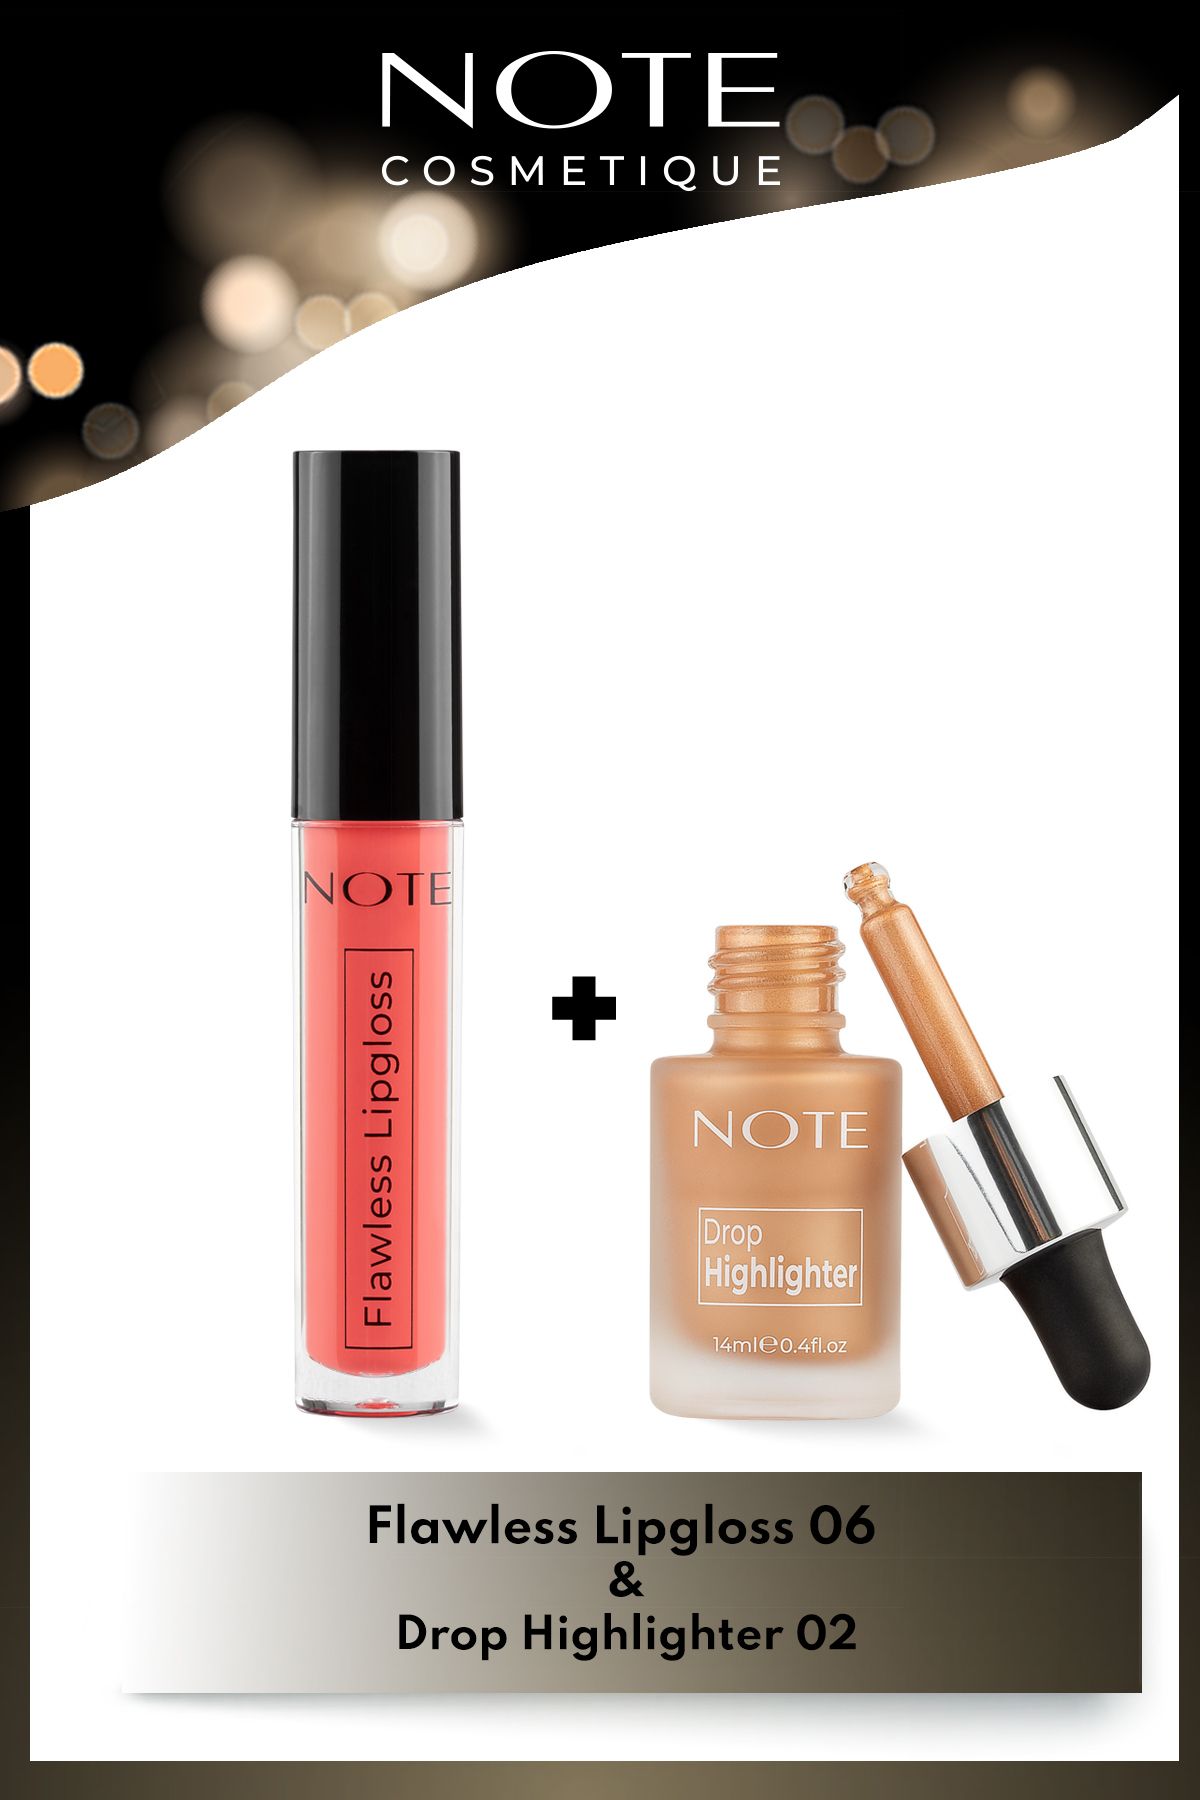 Note Cosmetics Flawless Lipgloss 06 - Pembe & Drop Highlighter 02 Charming Desert Likit Aydınlatıcı Makyaj Seti